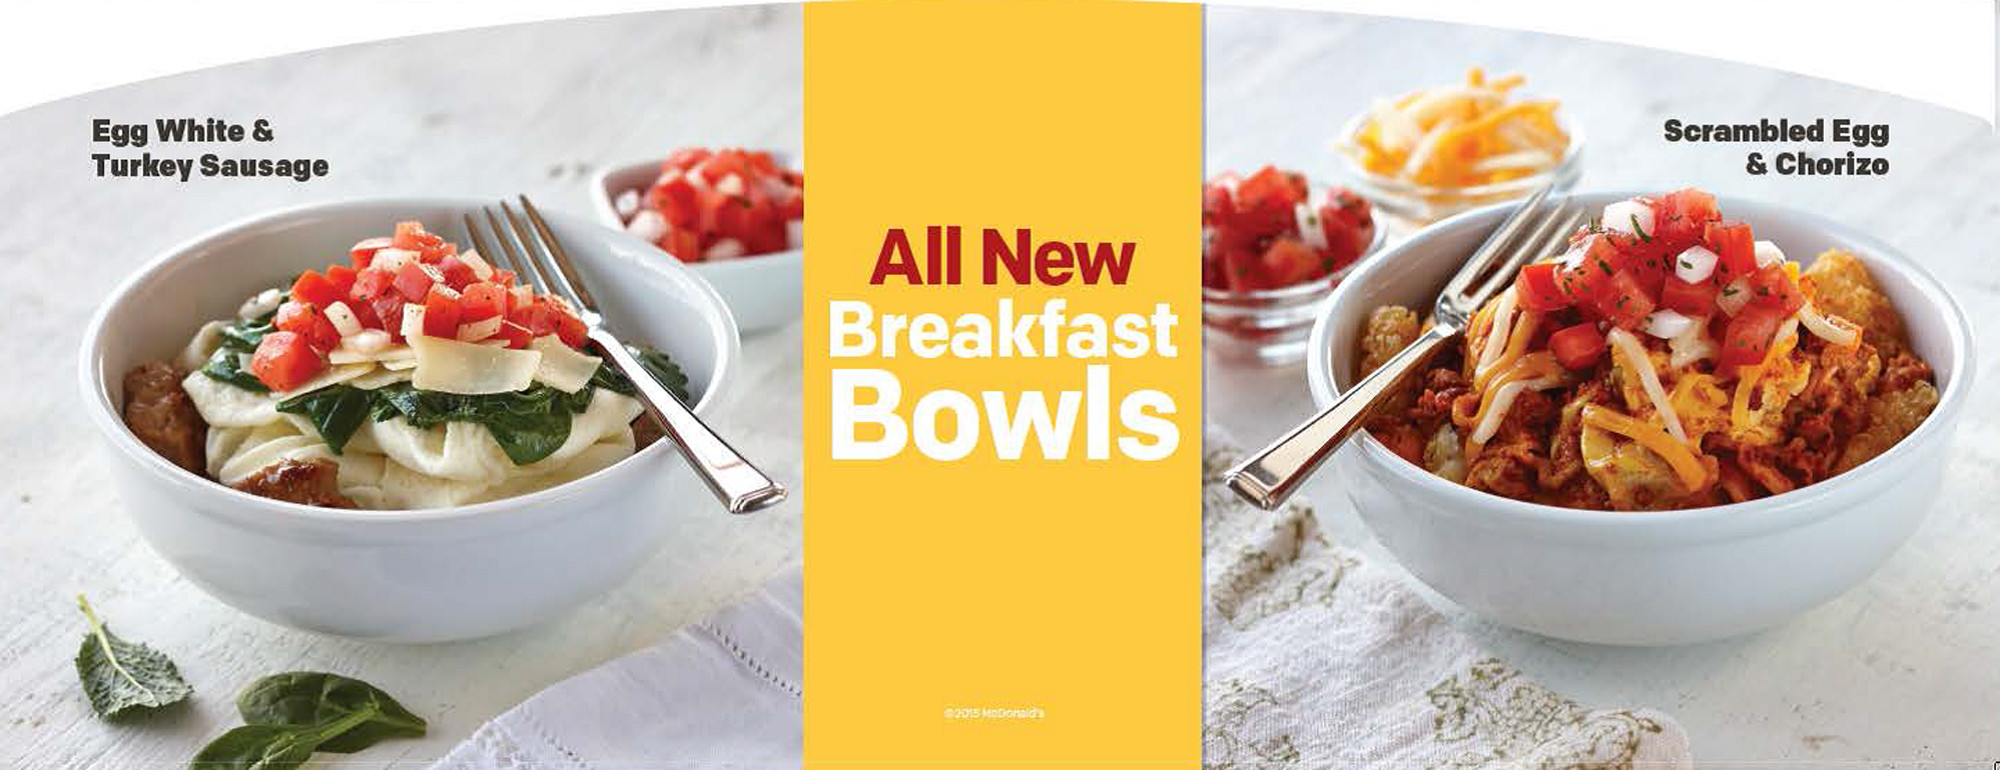 Mcdonalds Healthy Breakfast
 McDonald s adding new ingre nt kale HT Health